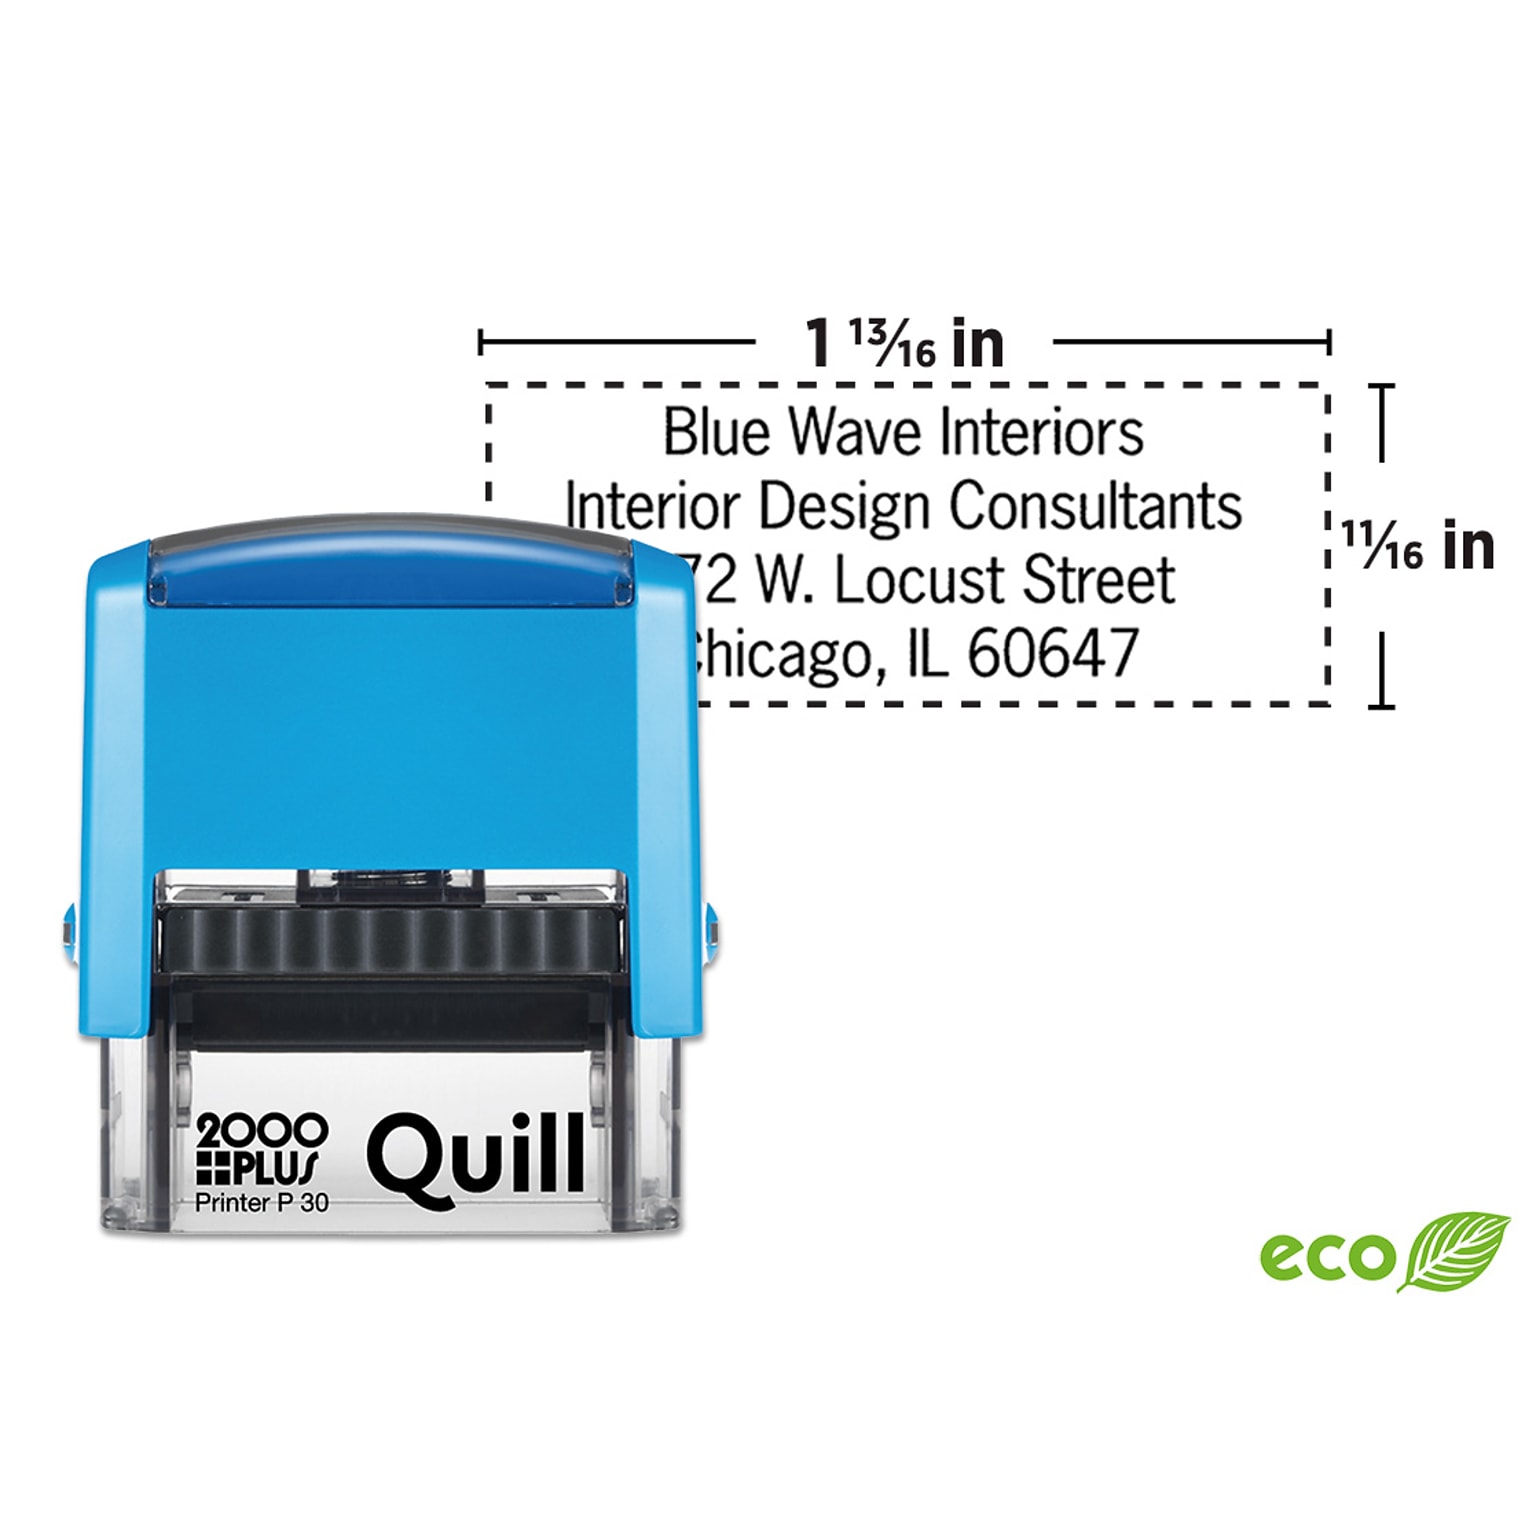 Custom Quill 2000 Plus® Self-Inking Printer P 30 Stamp, 11/16 x 1-13/16”